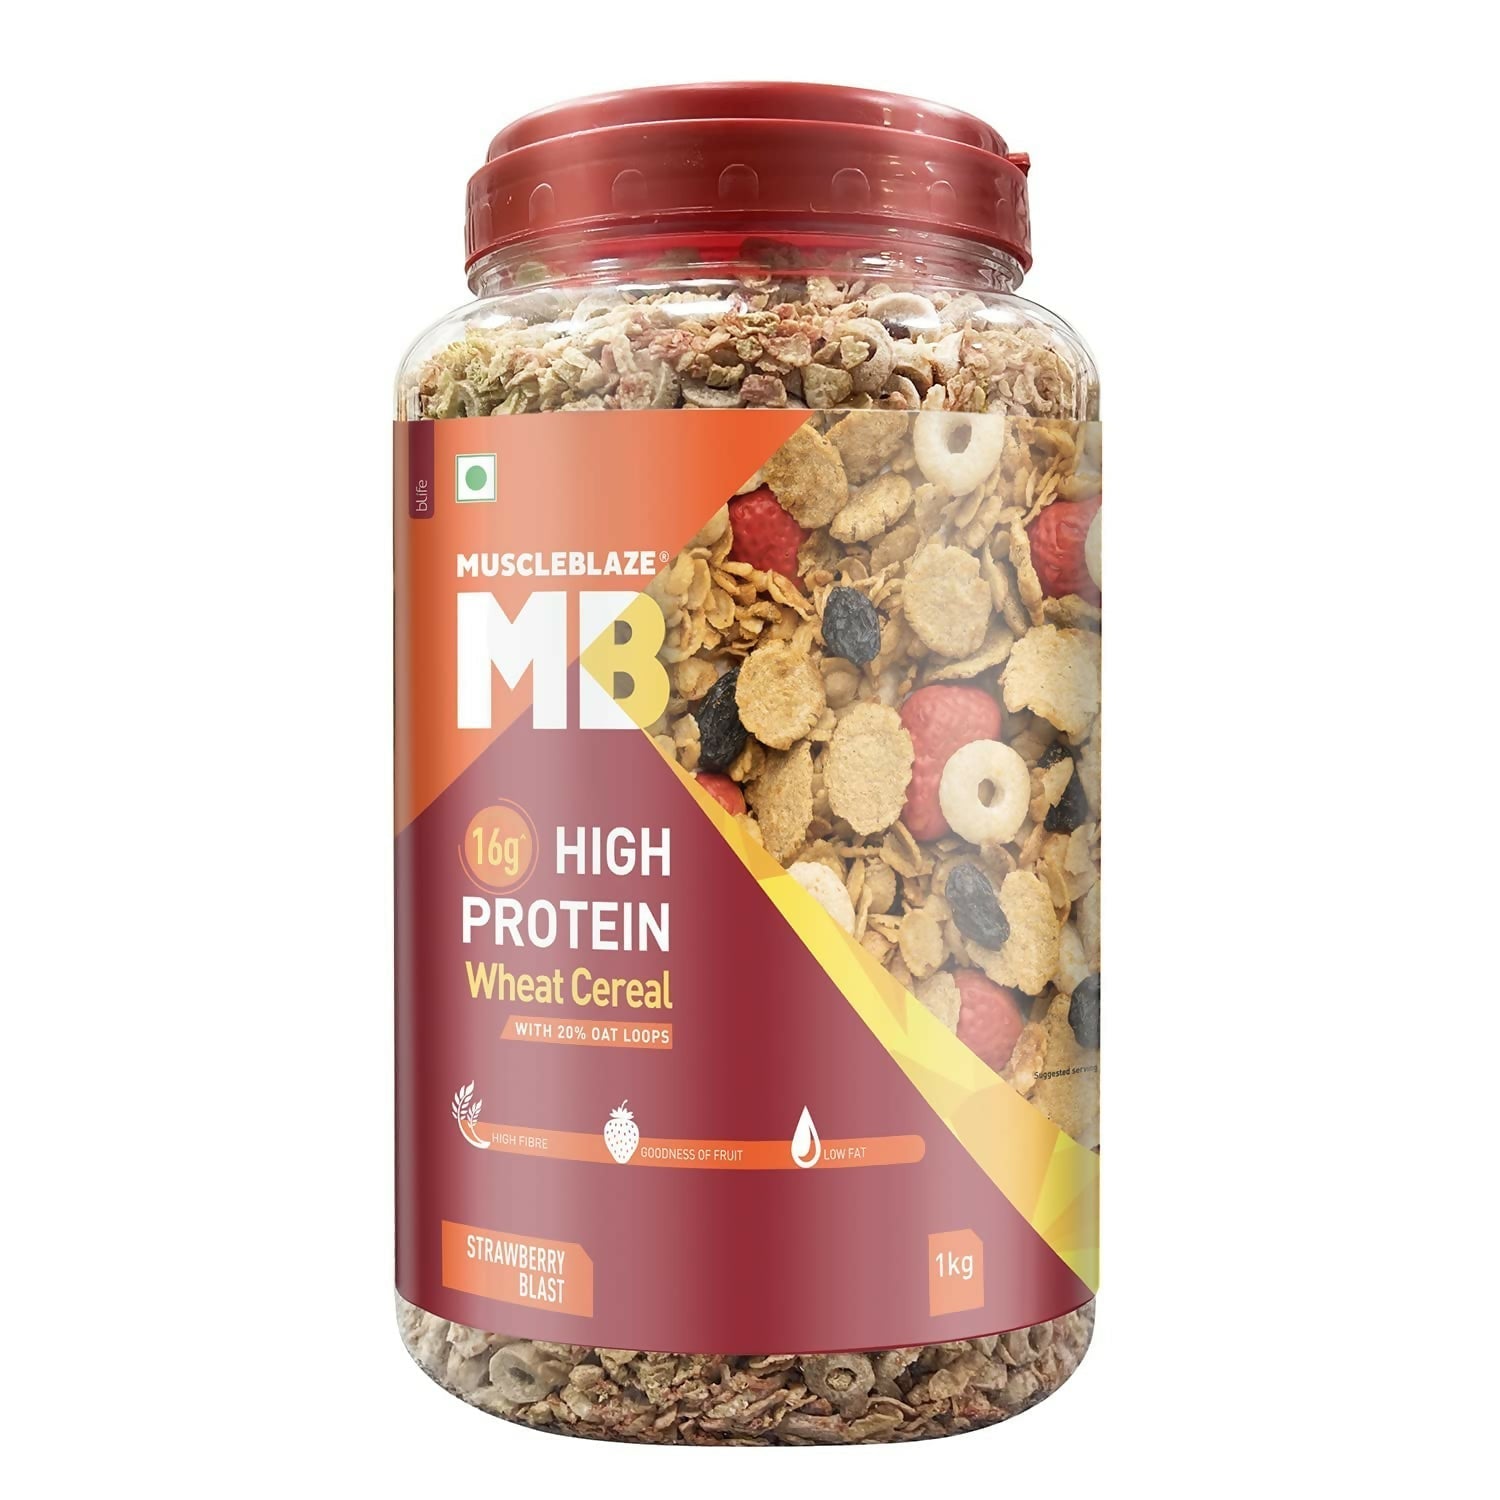 MuscleBlaze 16g High Protein Wheat Cereal - Strawberry Blast - BUDNE